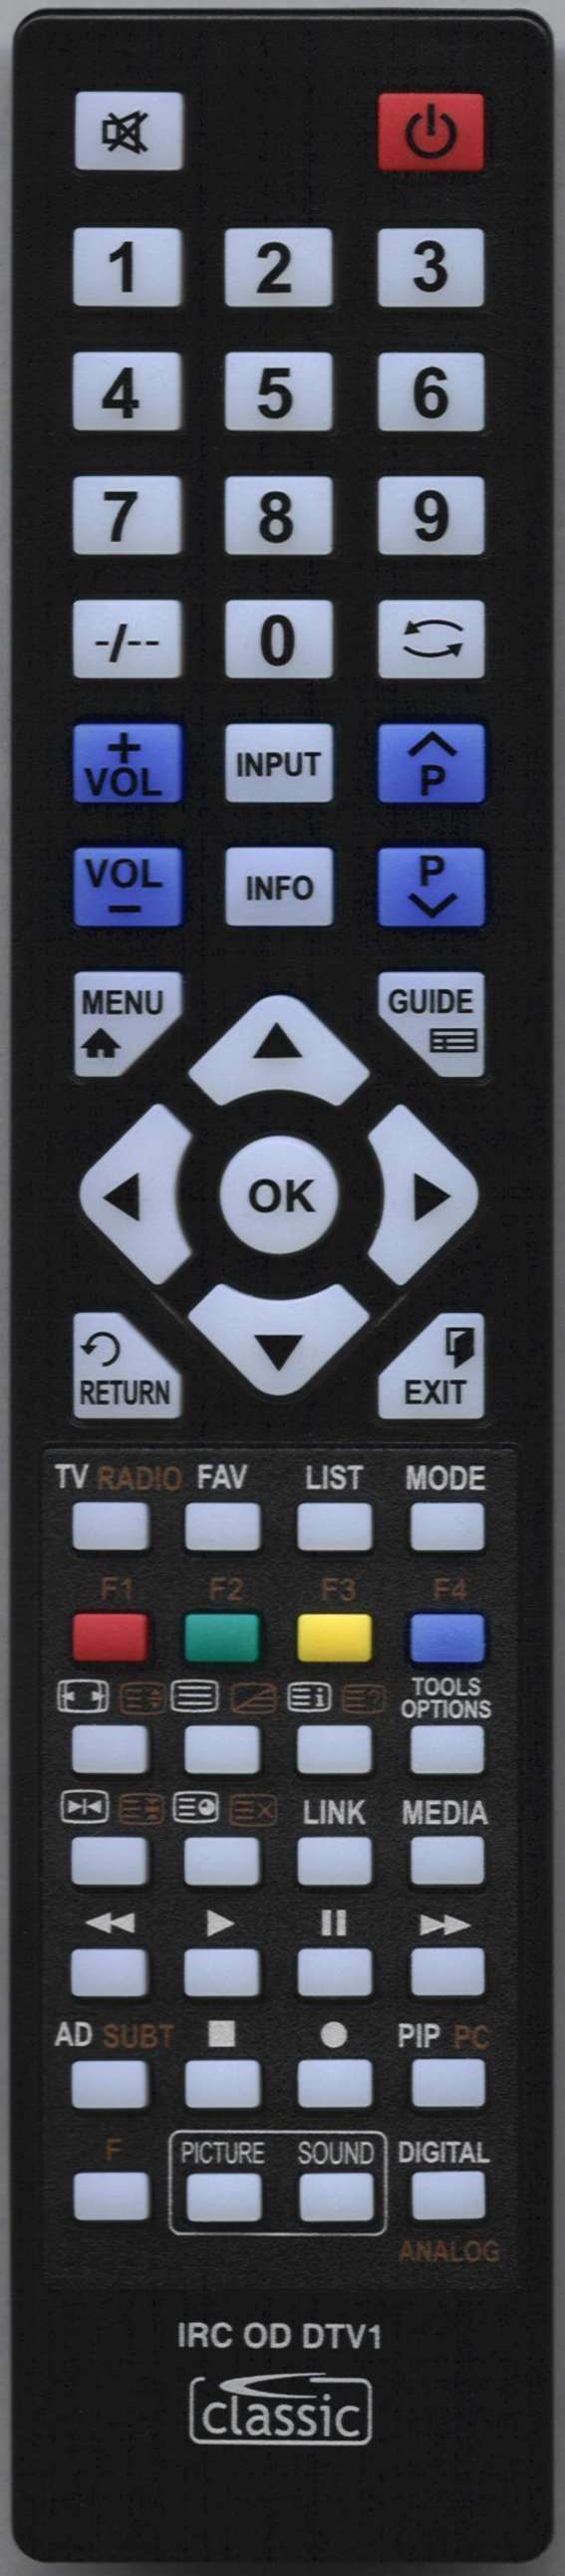 AOC LC42K0D3D Remote Control